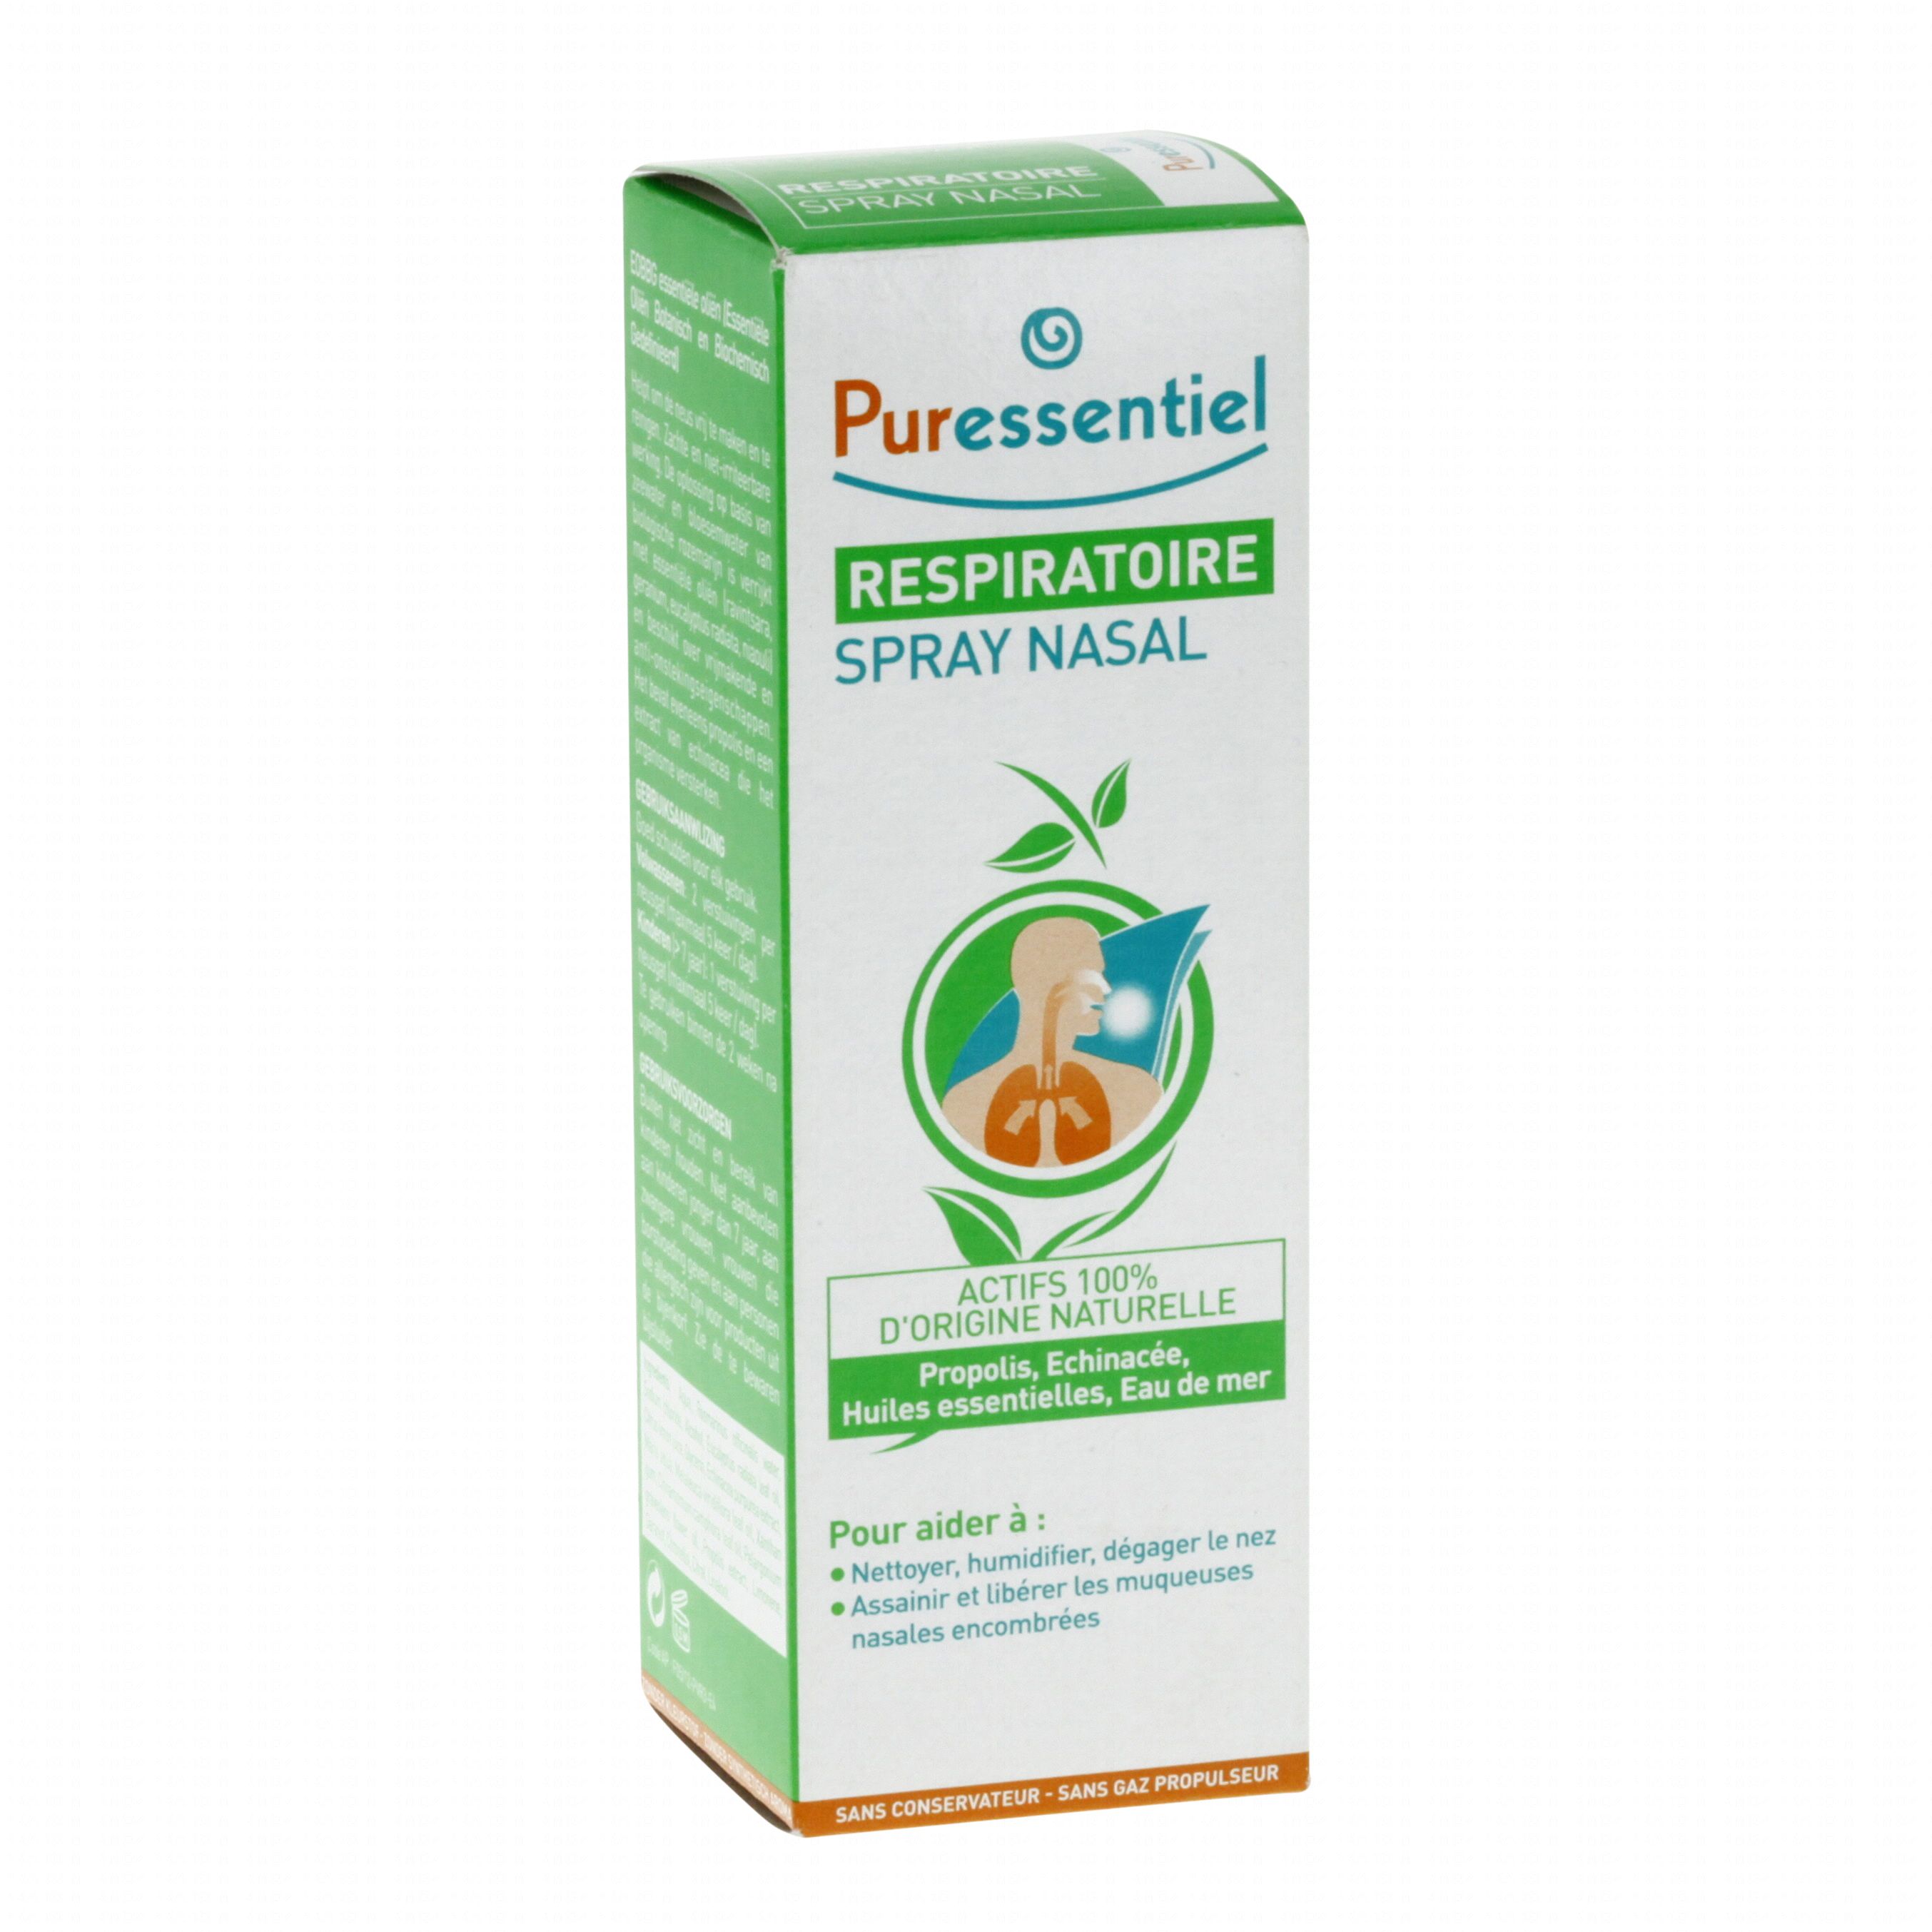 PURESSENTIEL Spray respiratoire nasal décongestionnant vapo 15ml -  Parapharmacie Prado Mermoz